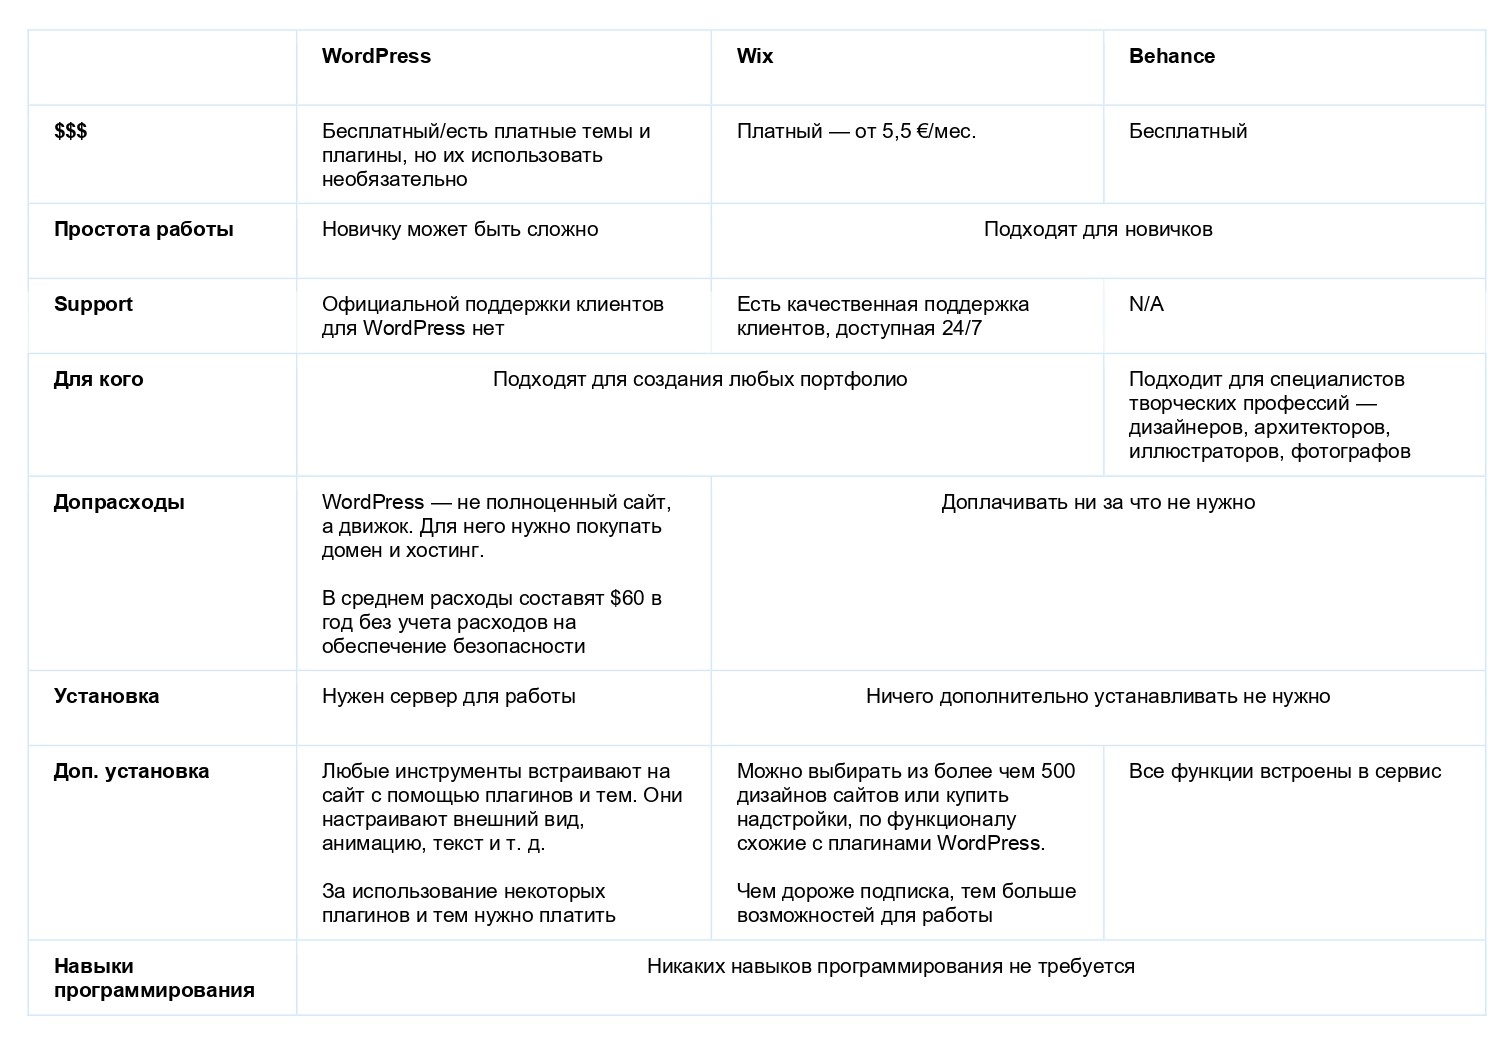 Таблица москва санкт петербург сравнение